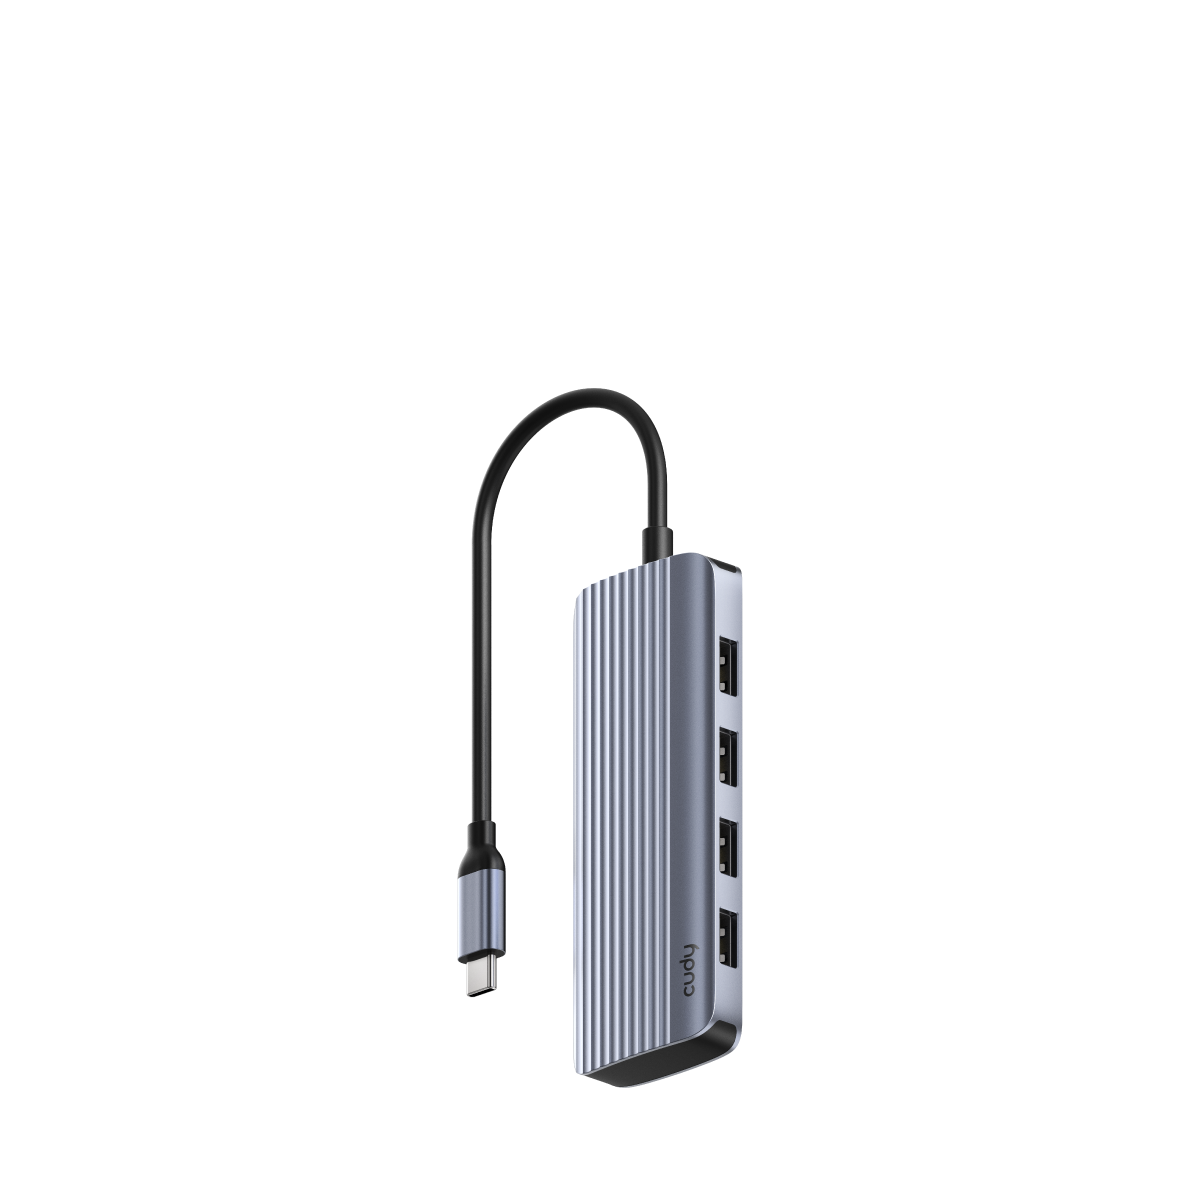 6-In-1 USB-C Hub, UH500 1.0